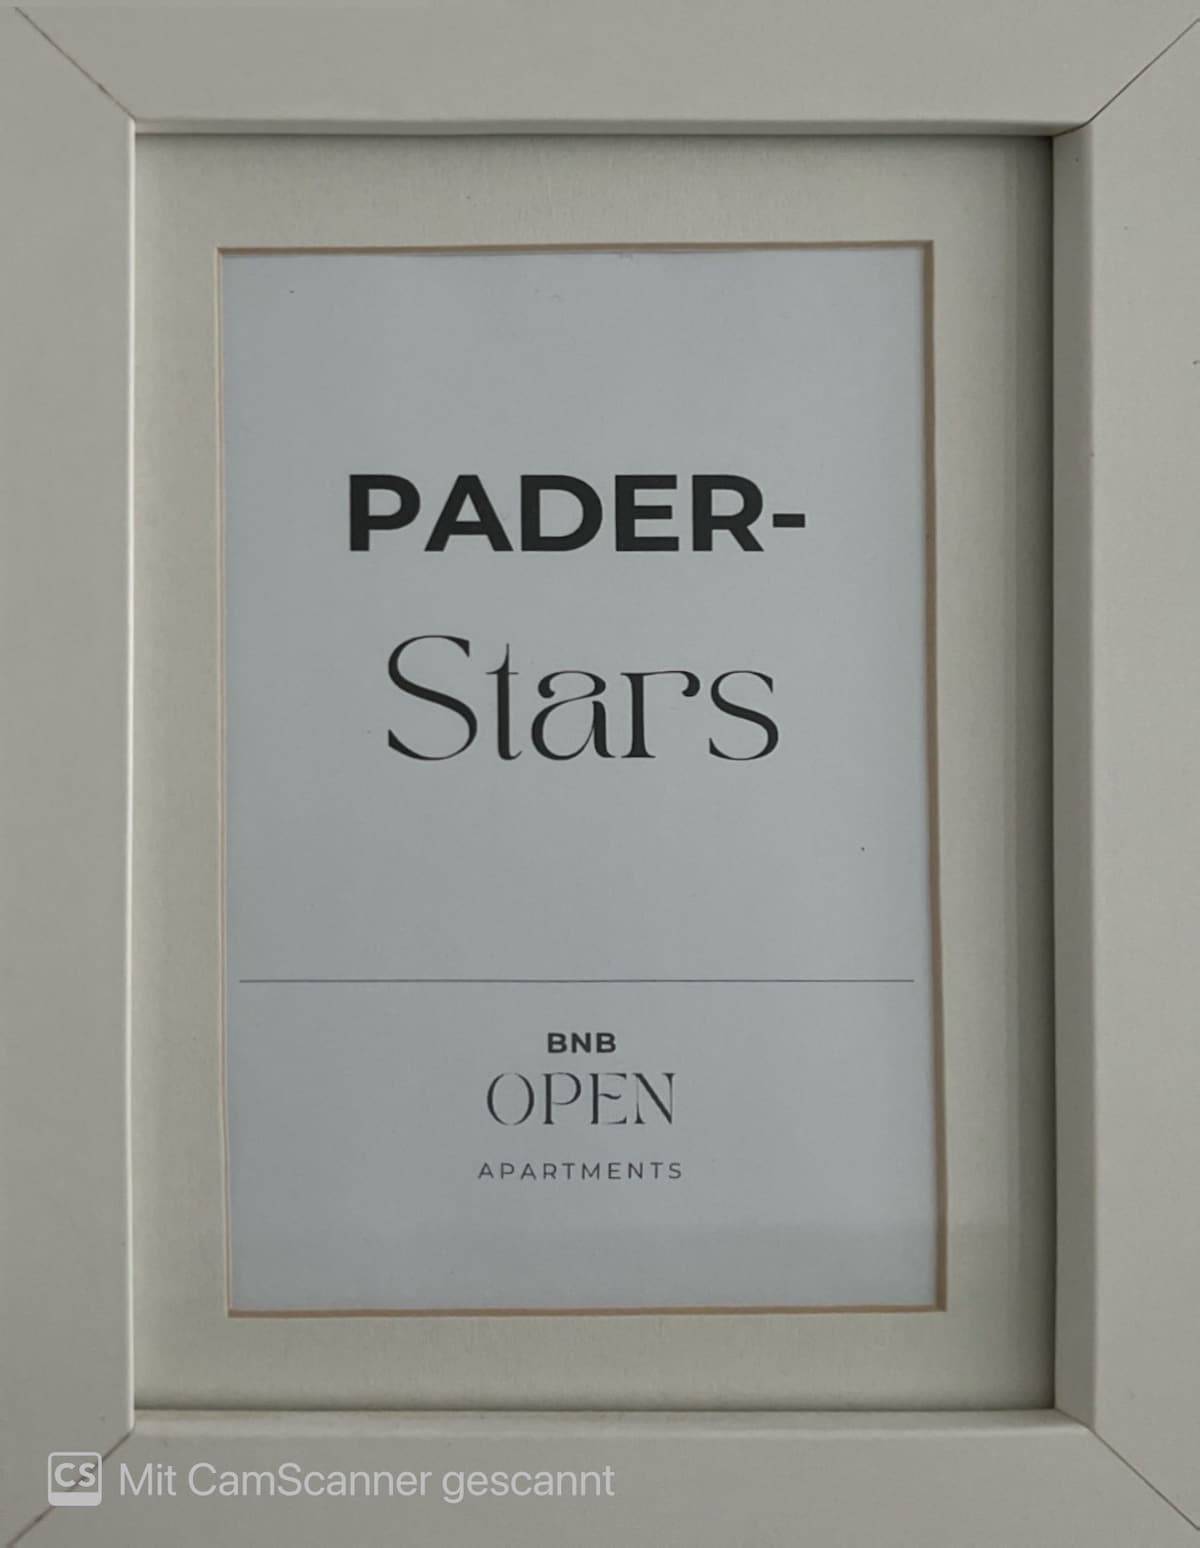 BNB Open Apartments Pader-Star